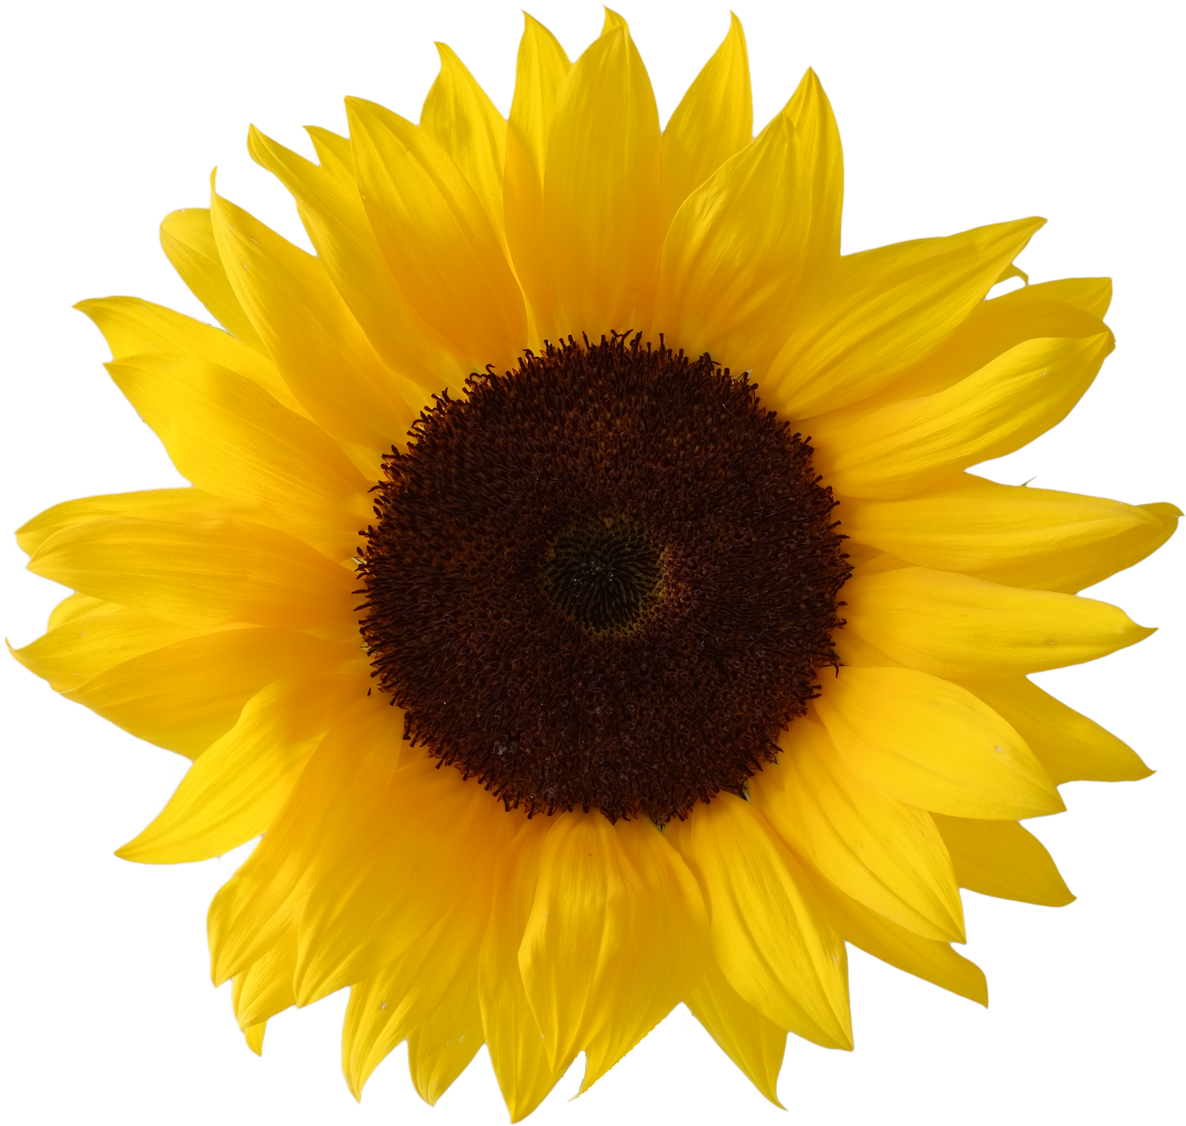 girasol sunflower freetoedit sticker by @sugey_garcia